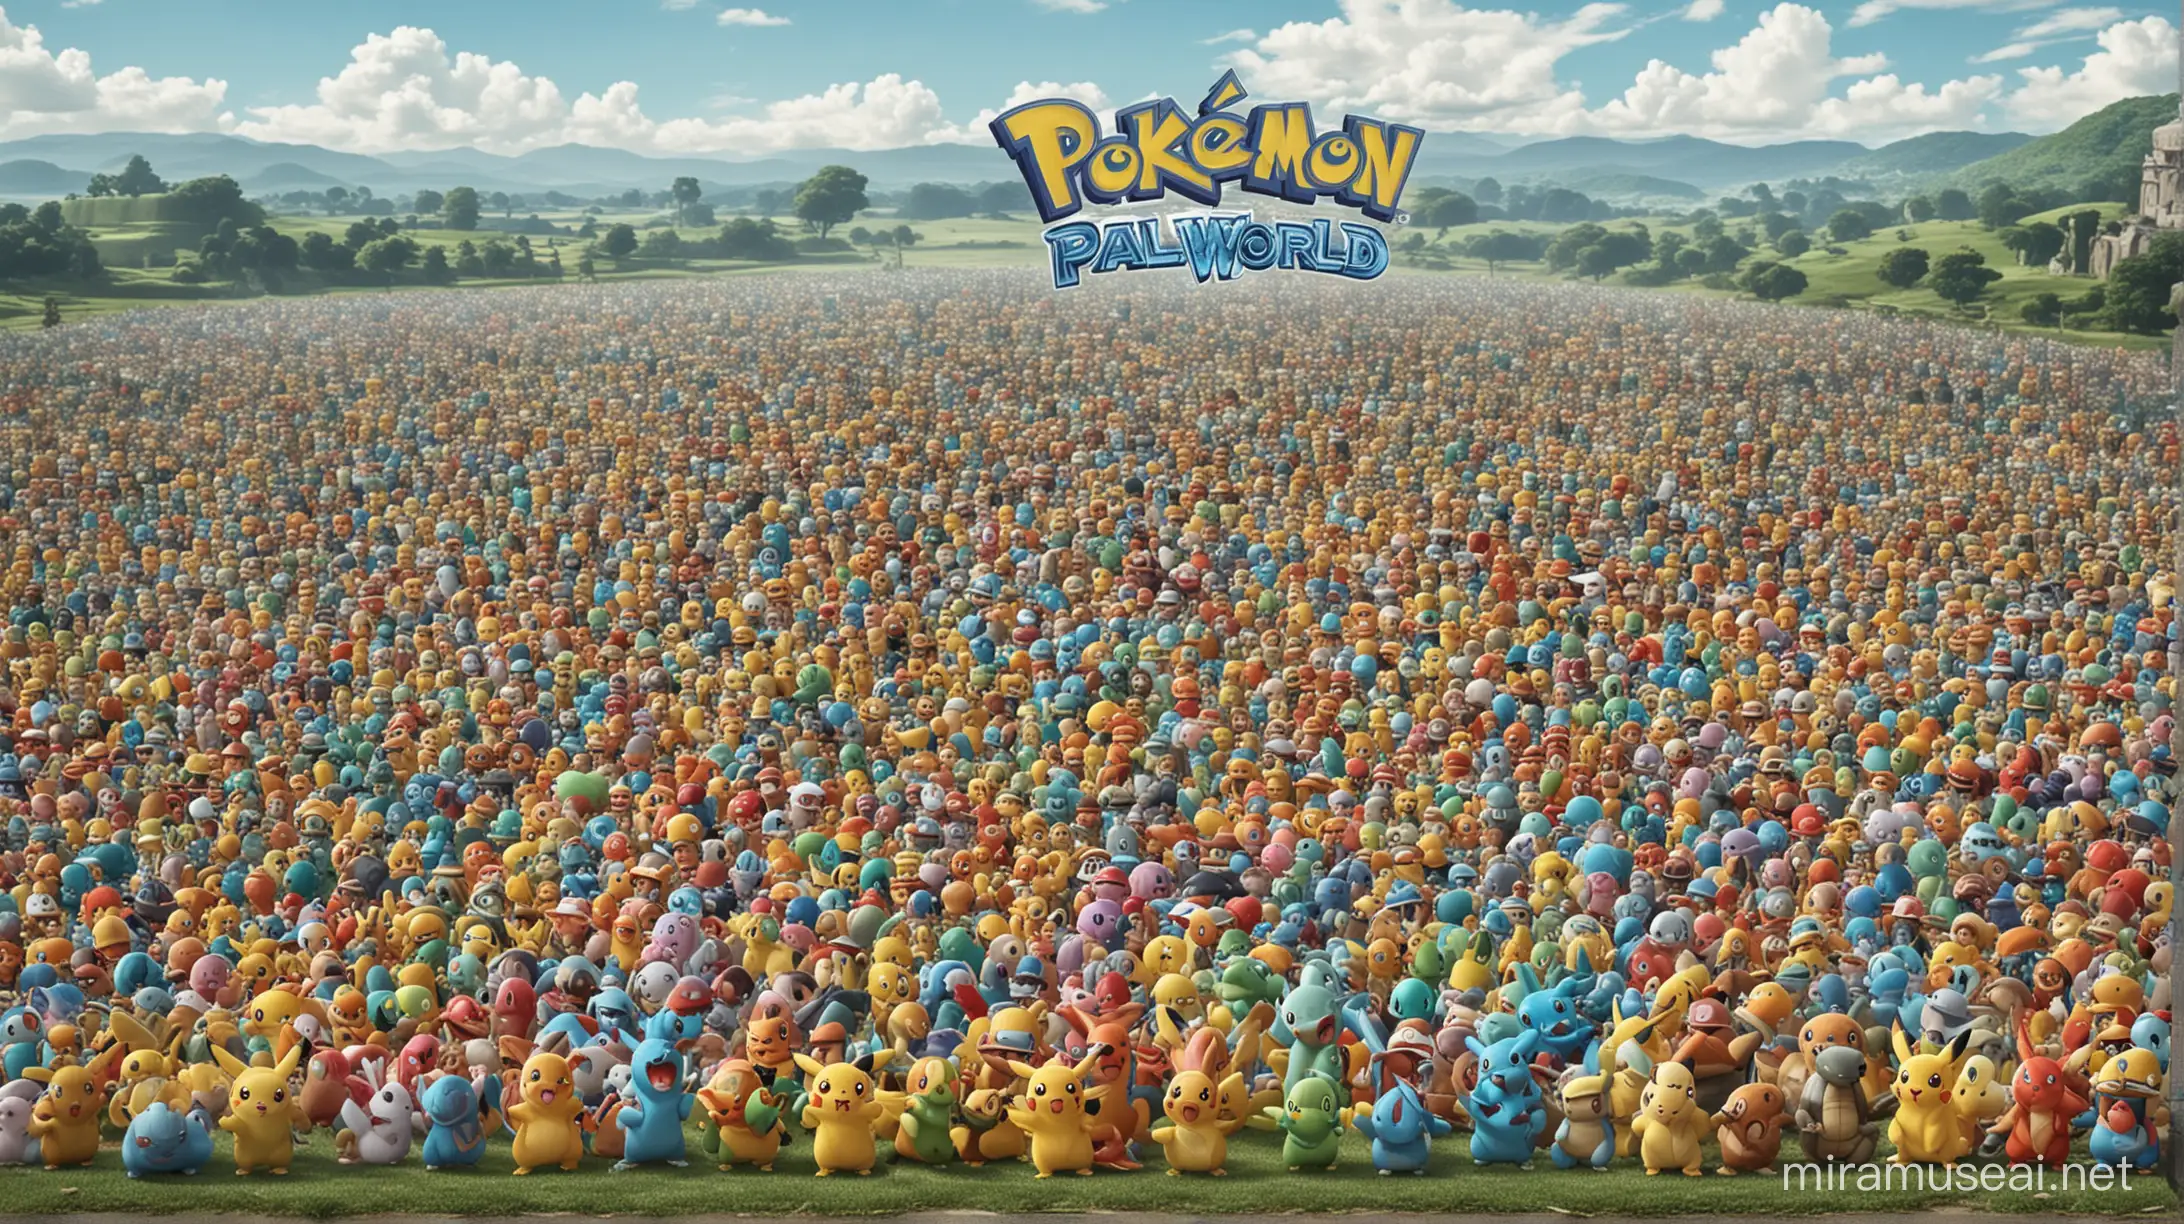 Colorful Palworld Pokemon Characters Exploring a Vibrant Fantasy World